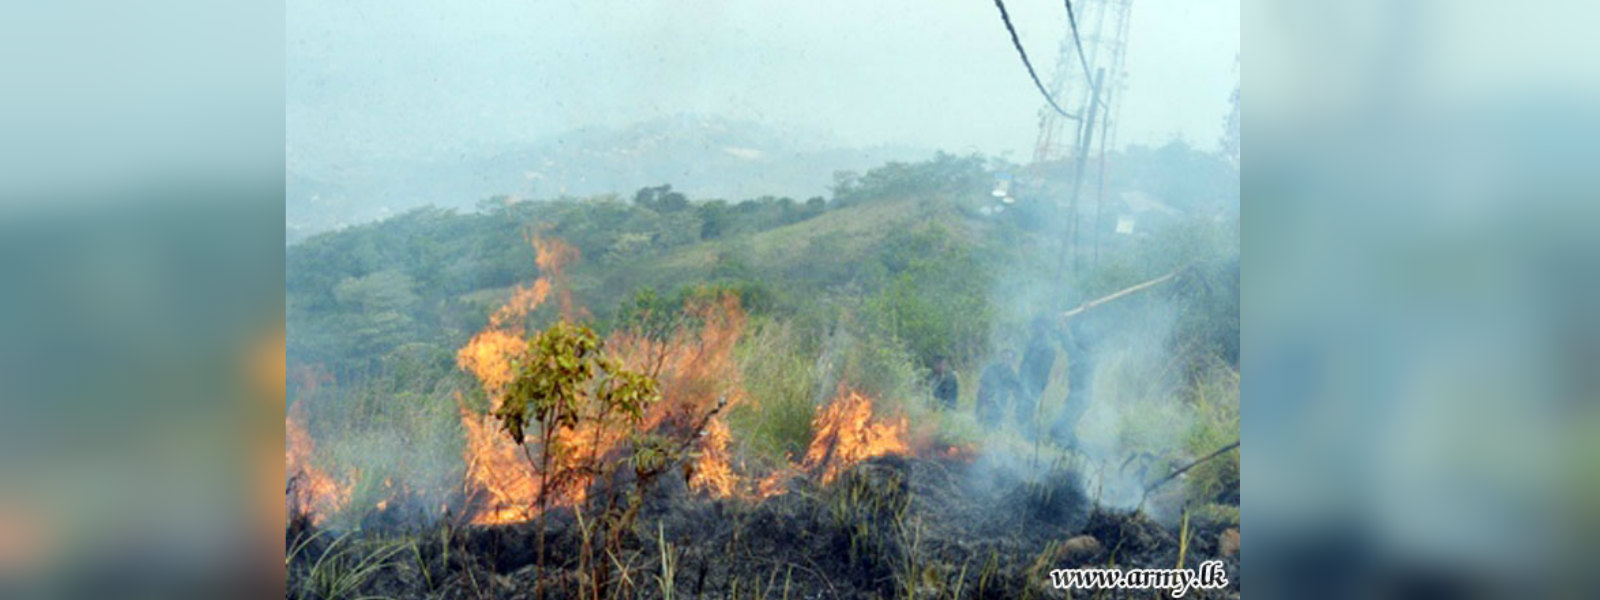 Maragala mountain wildfire destroys 500 acres